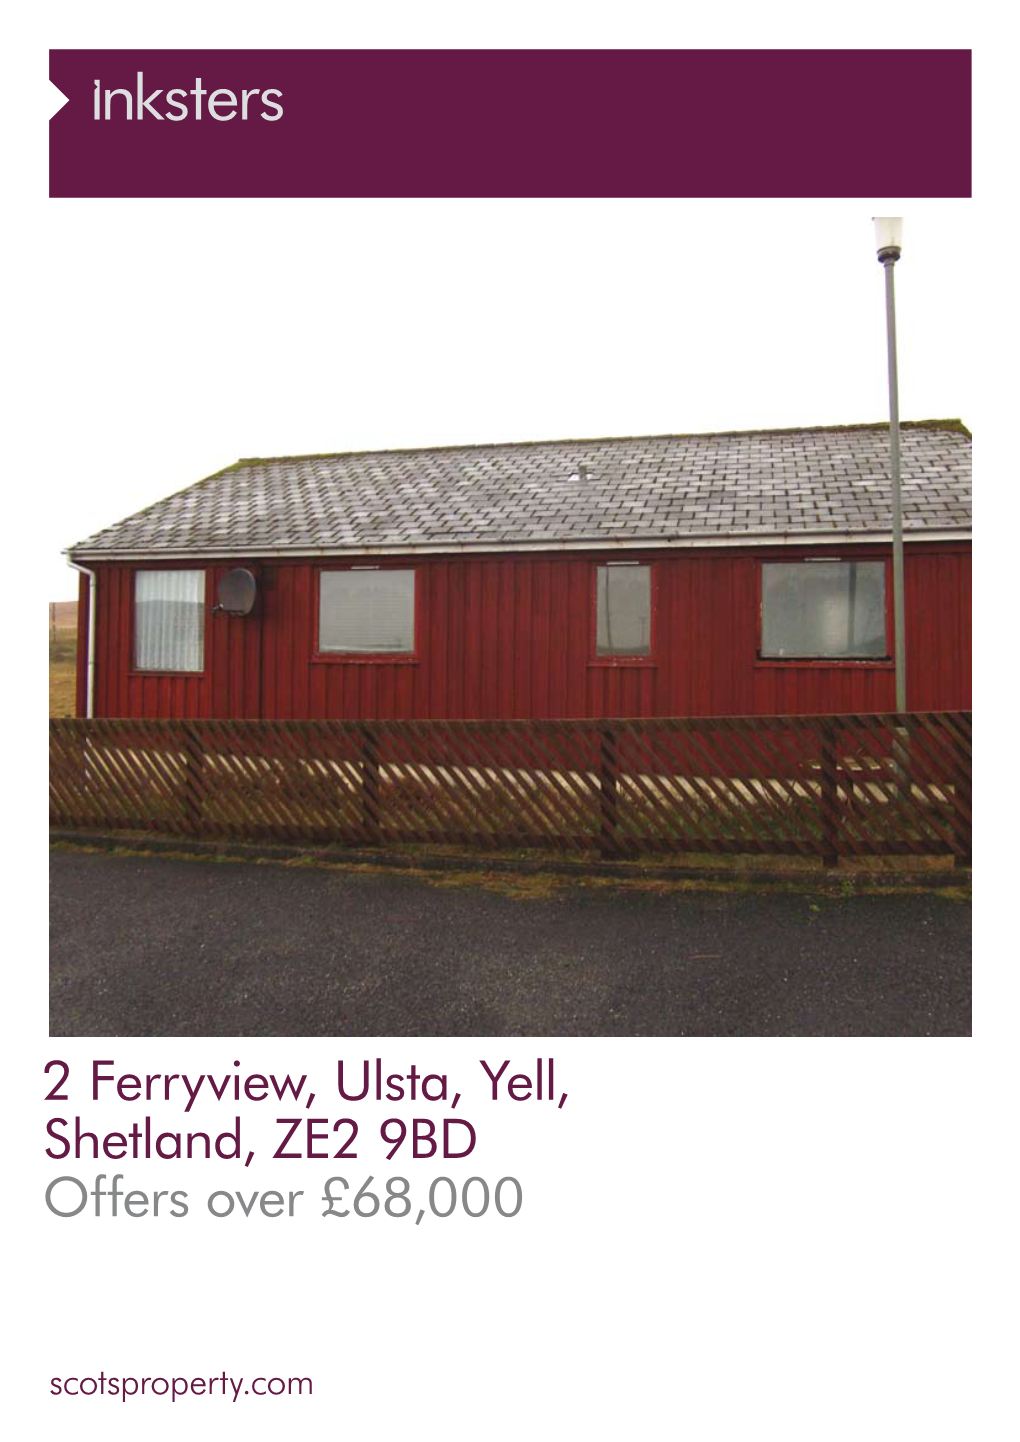 2 Ferryview, Ulsta, Yell, Shetland, ZE2 9BD Offers Over £68,000